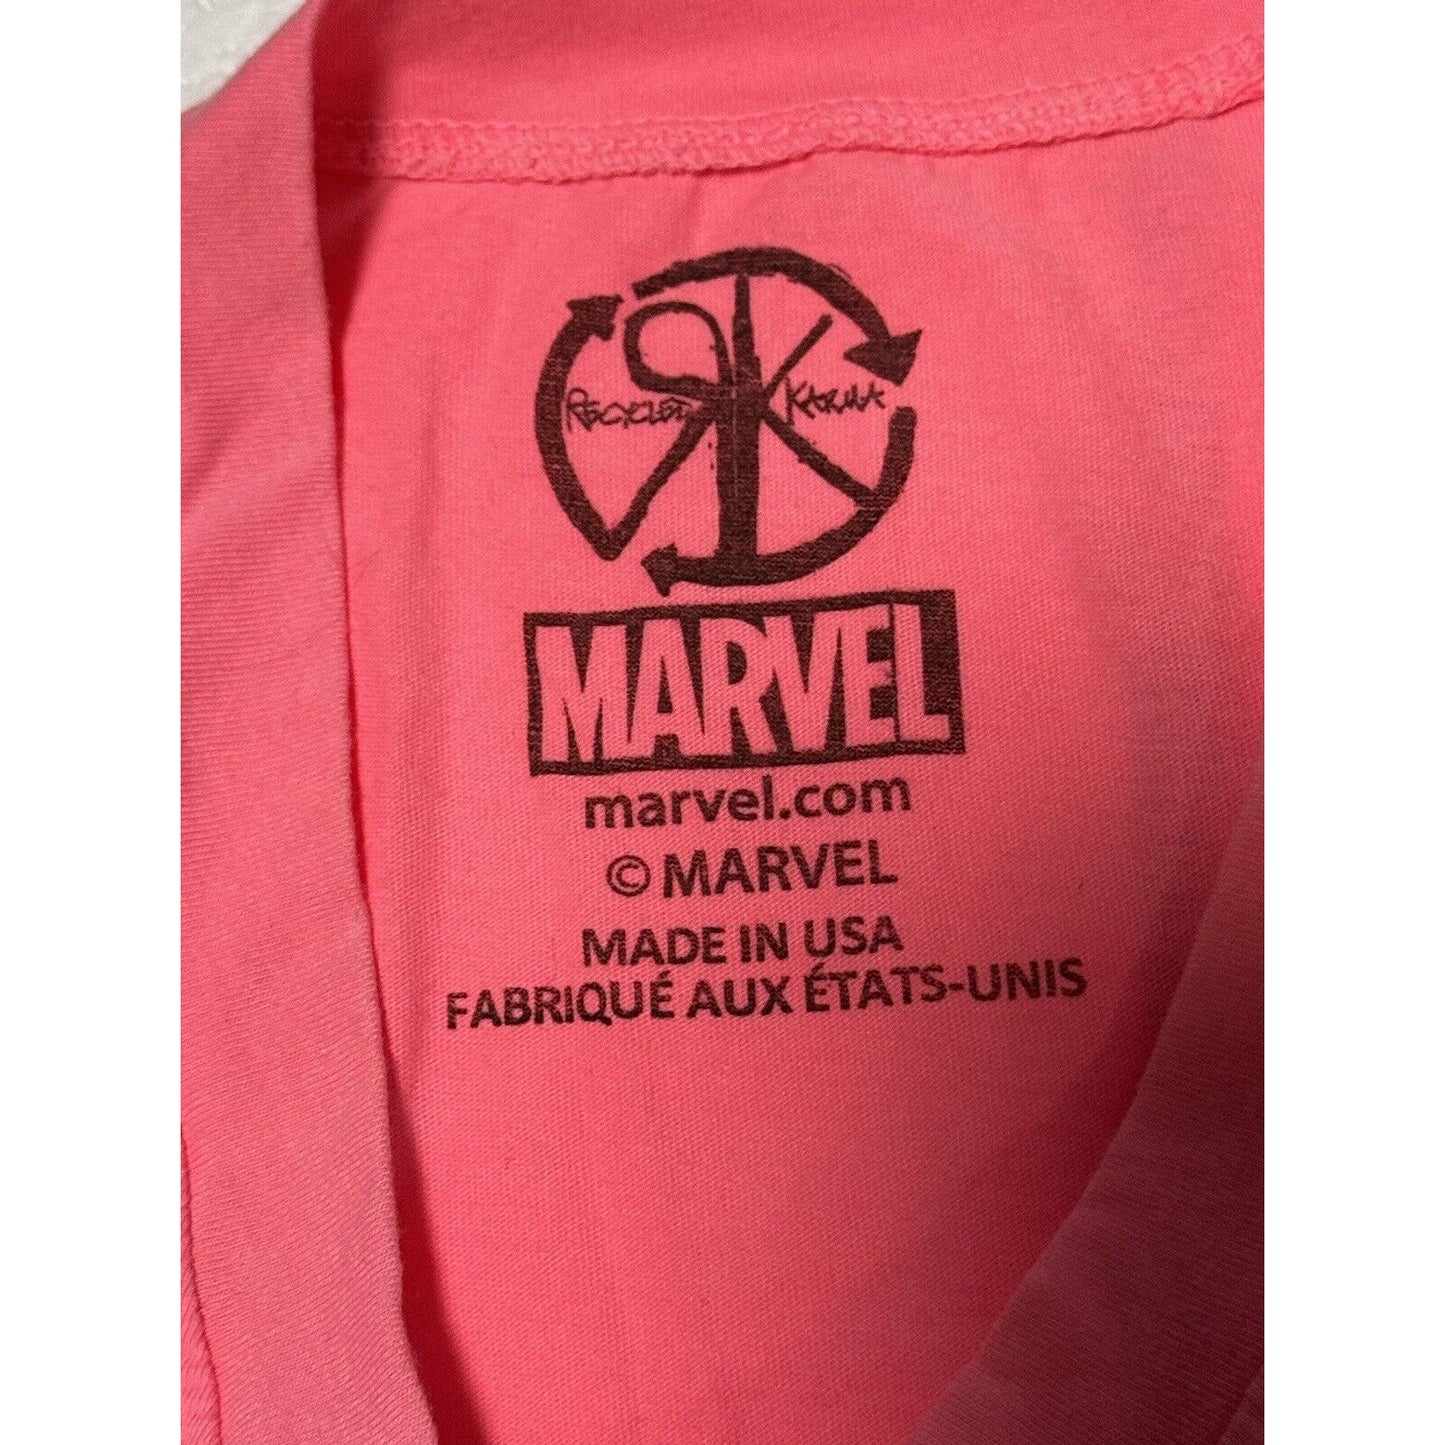 Marvel Comics Superheroes Sheer Pink Tank Top Size Medium SpiderMan X-men Hulk